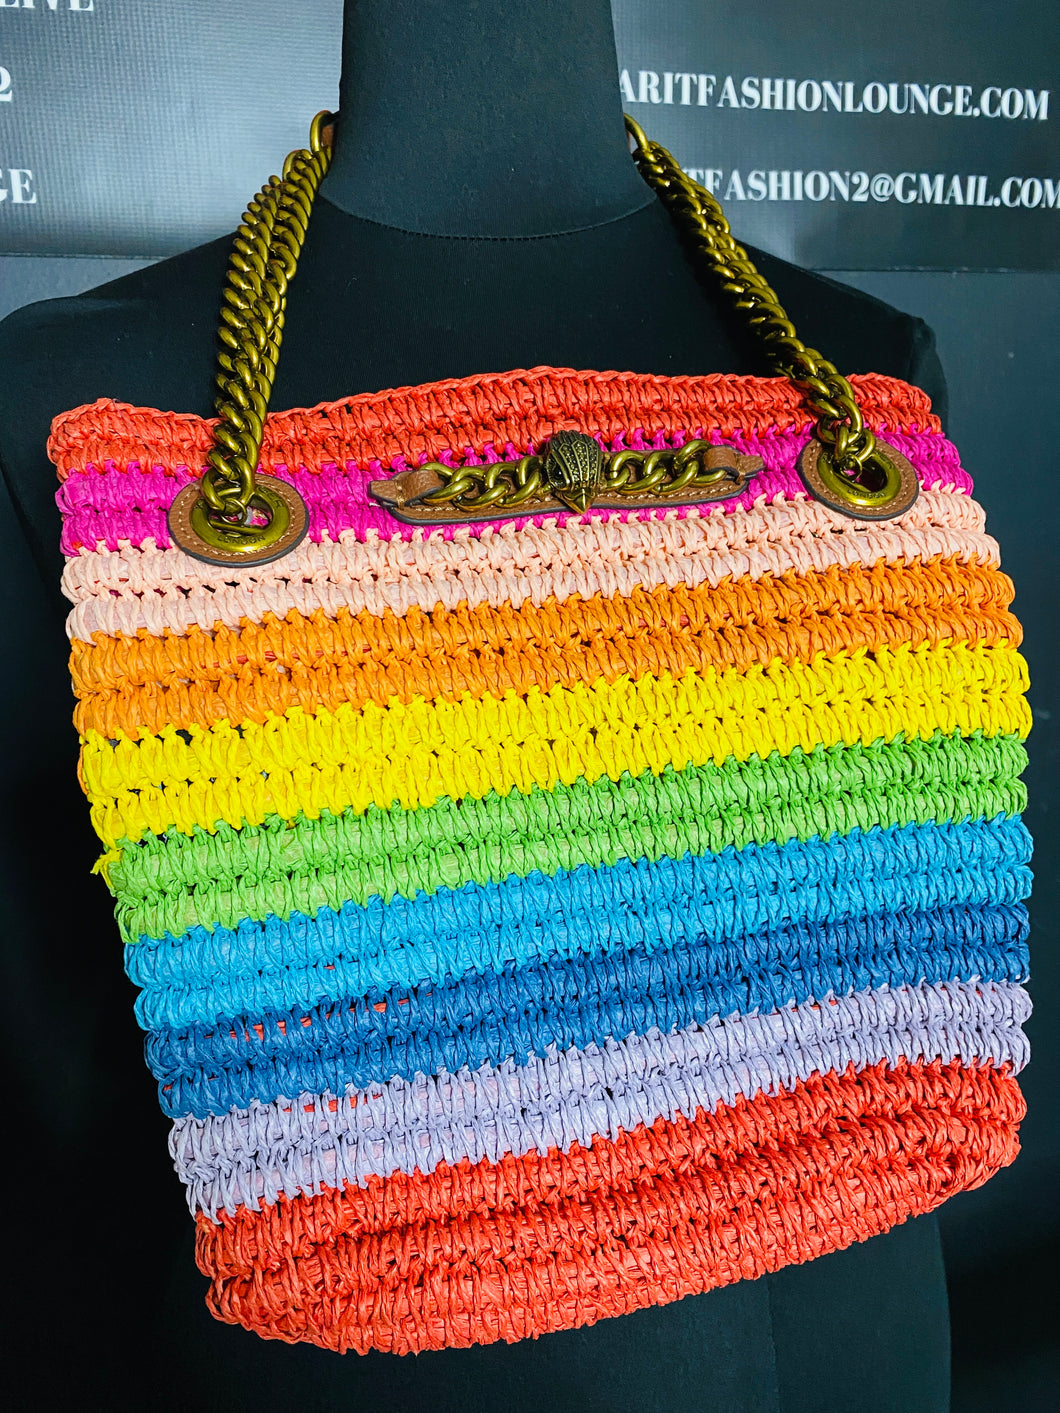 The Striped Rainbow Straw Bag